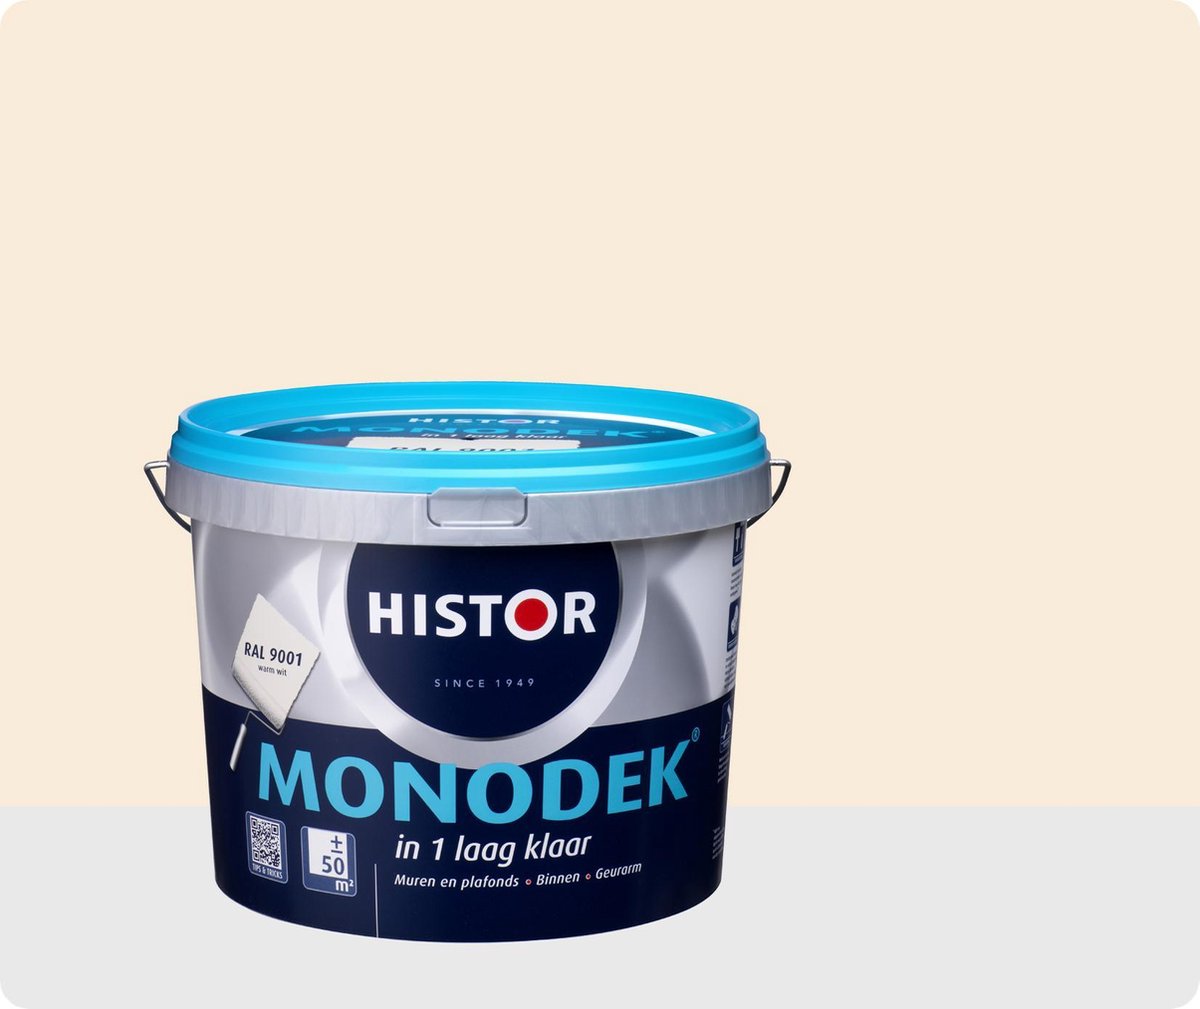 Histor Monodek Muurverf - 5 liter - Warm | bol.com